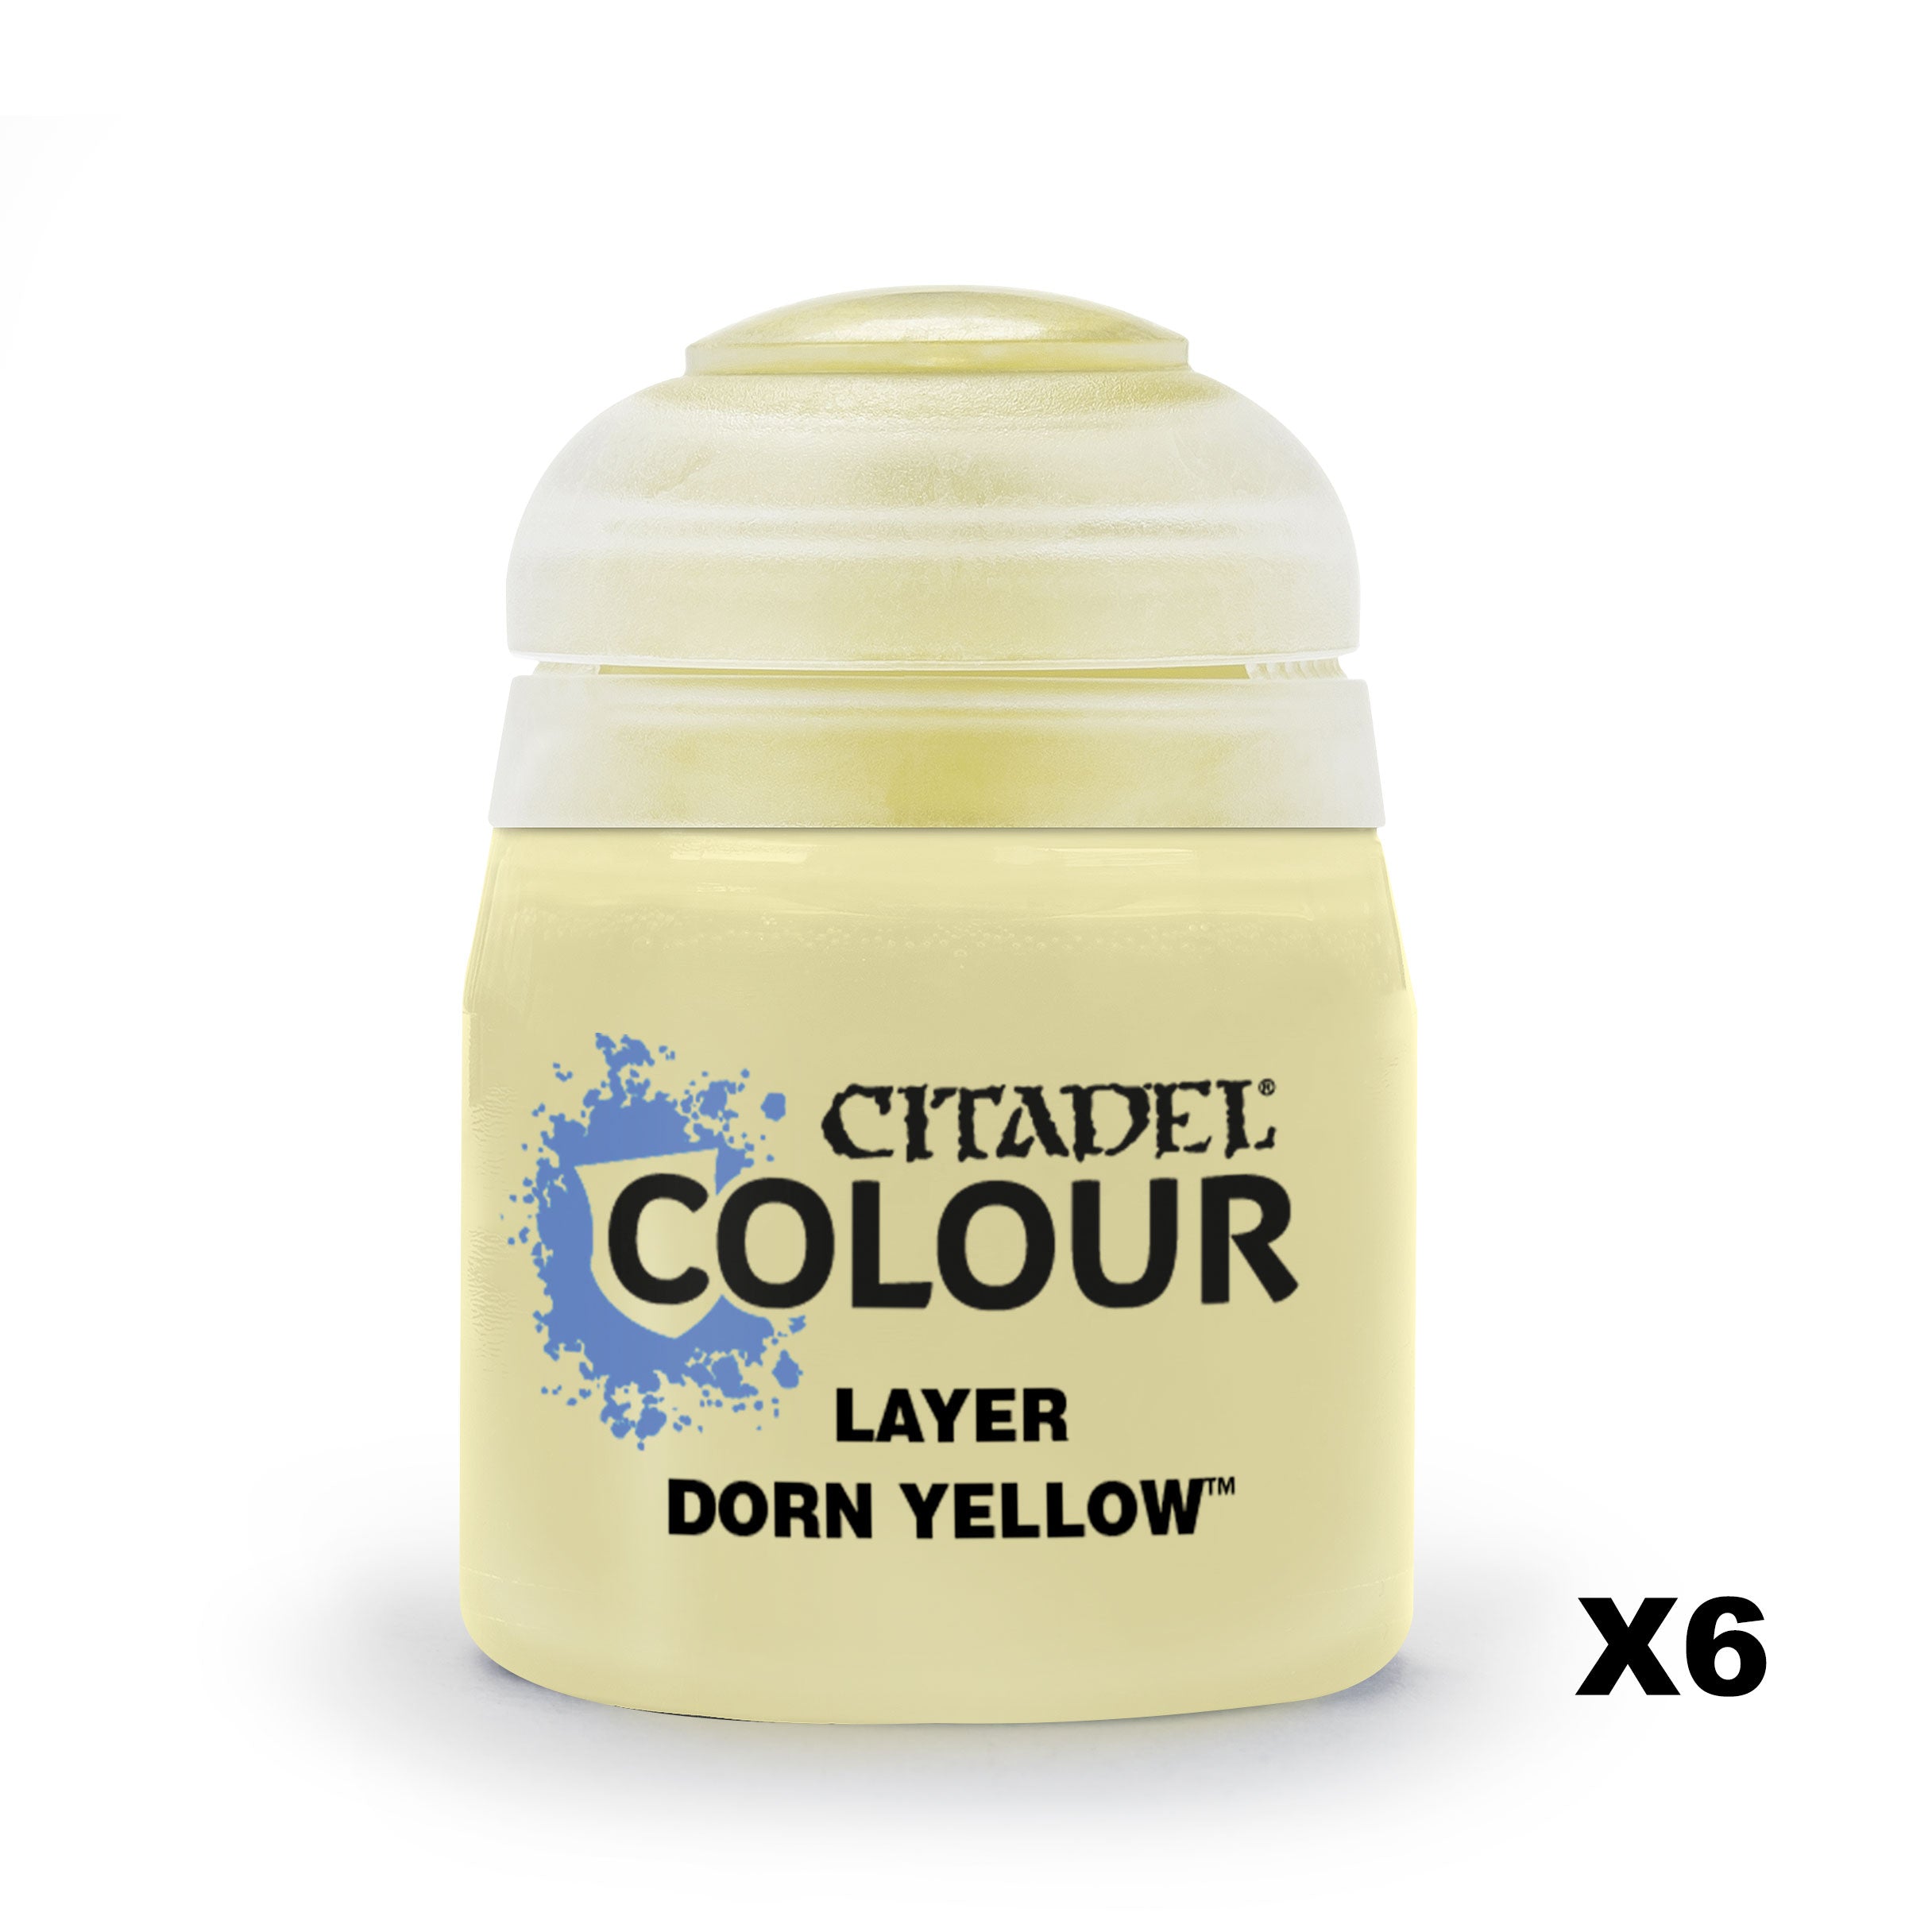 Dorn Yellow - Citadel Layer Colour